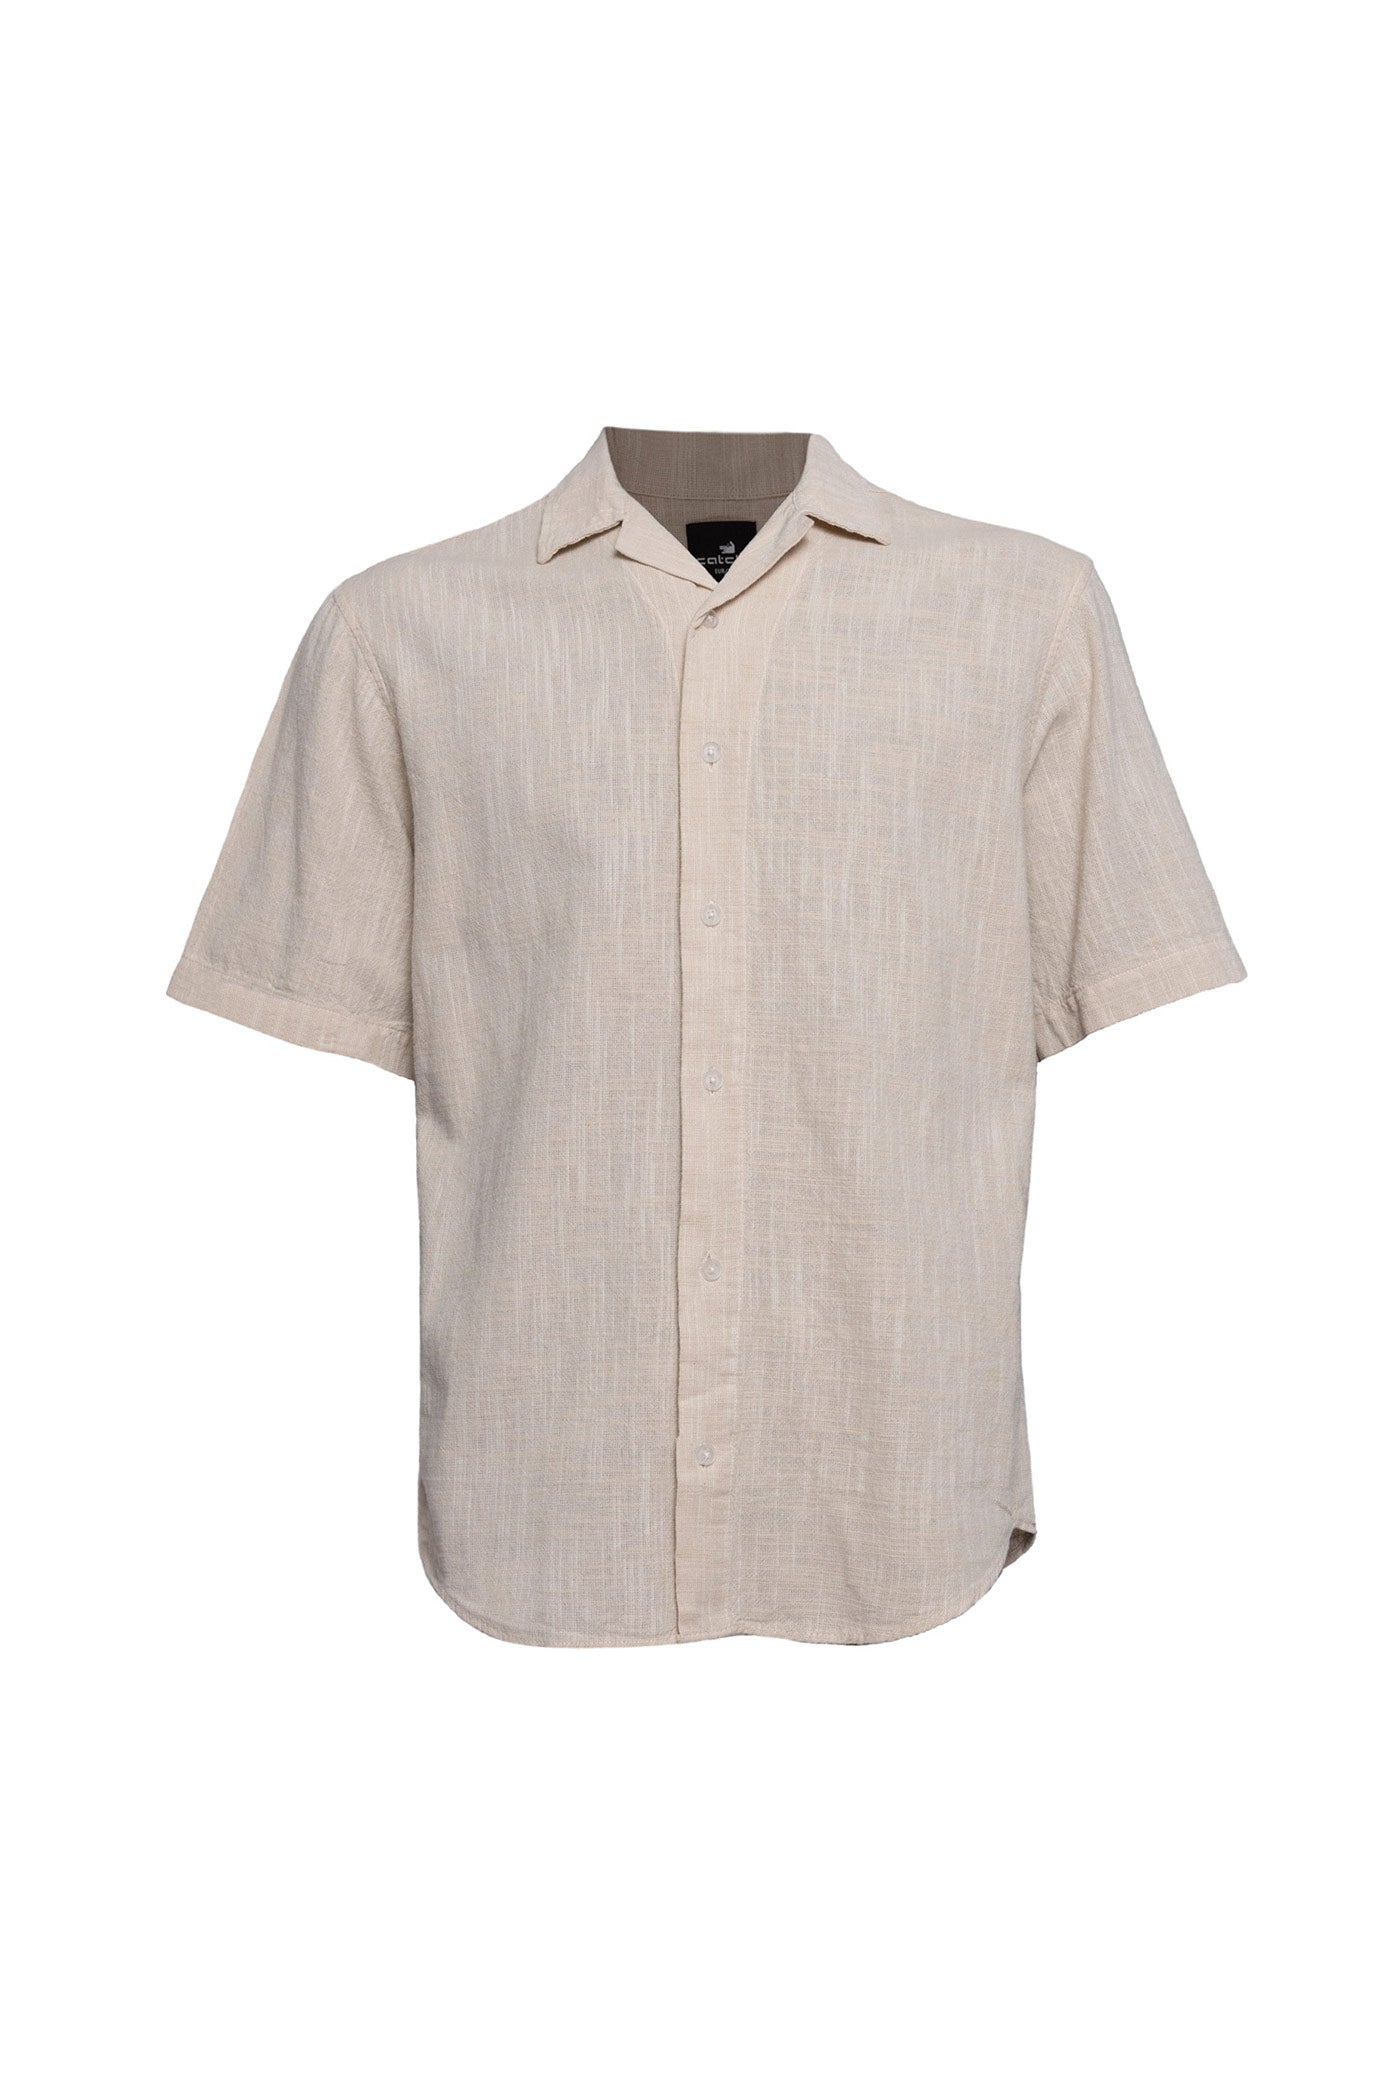 Men’s Neutrals Linen Button Down Short Sleeve Beige Shirt - Beige Small Monique Store